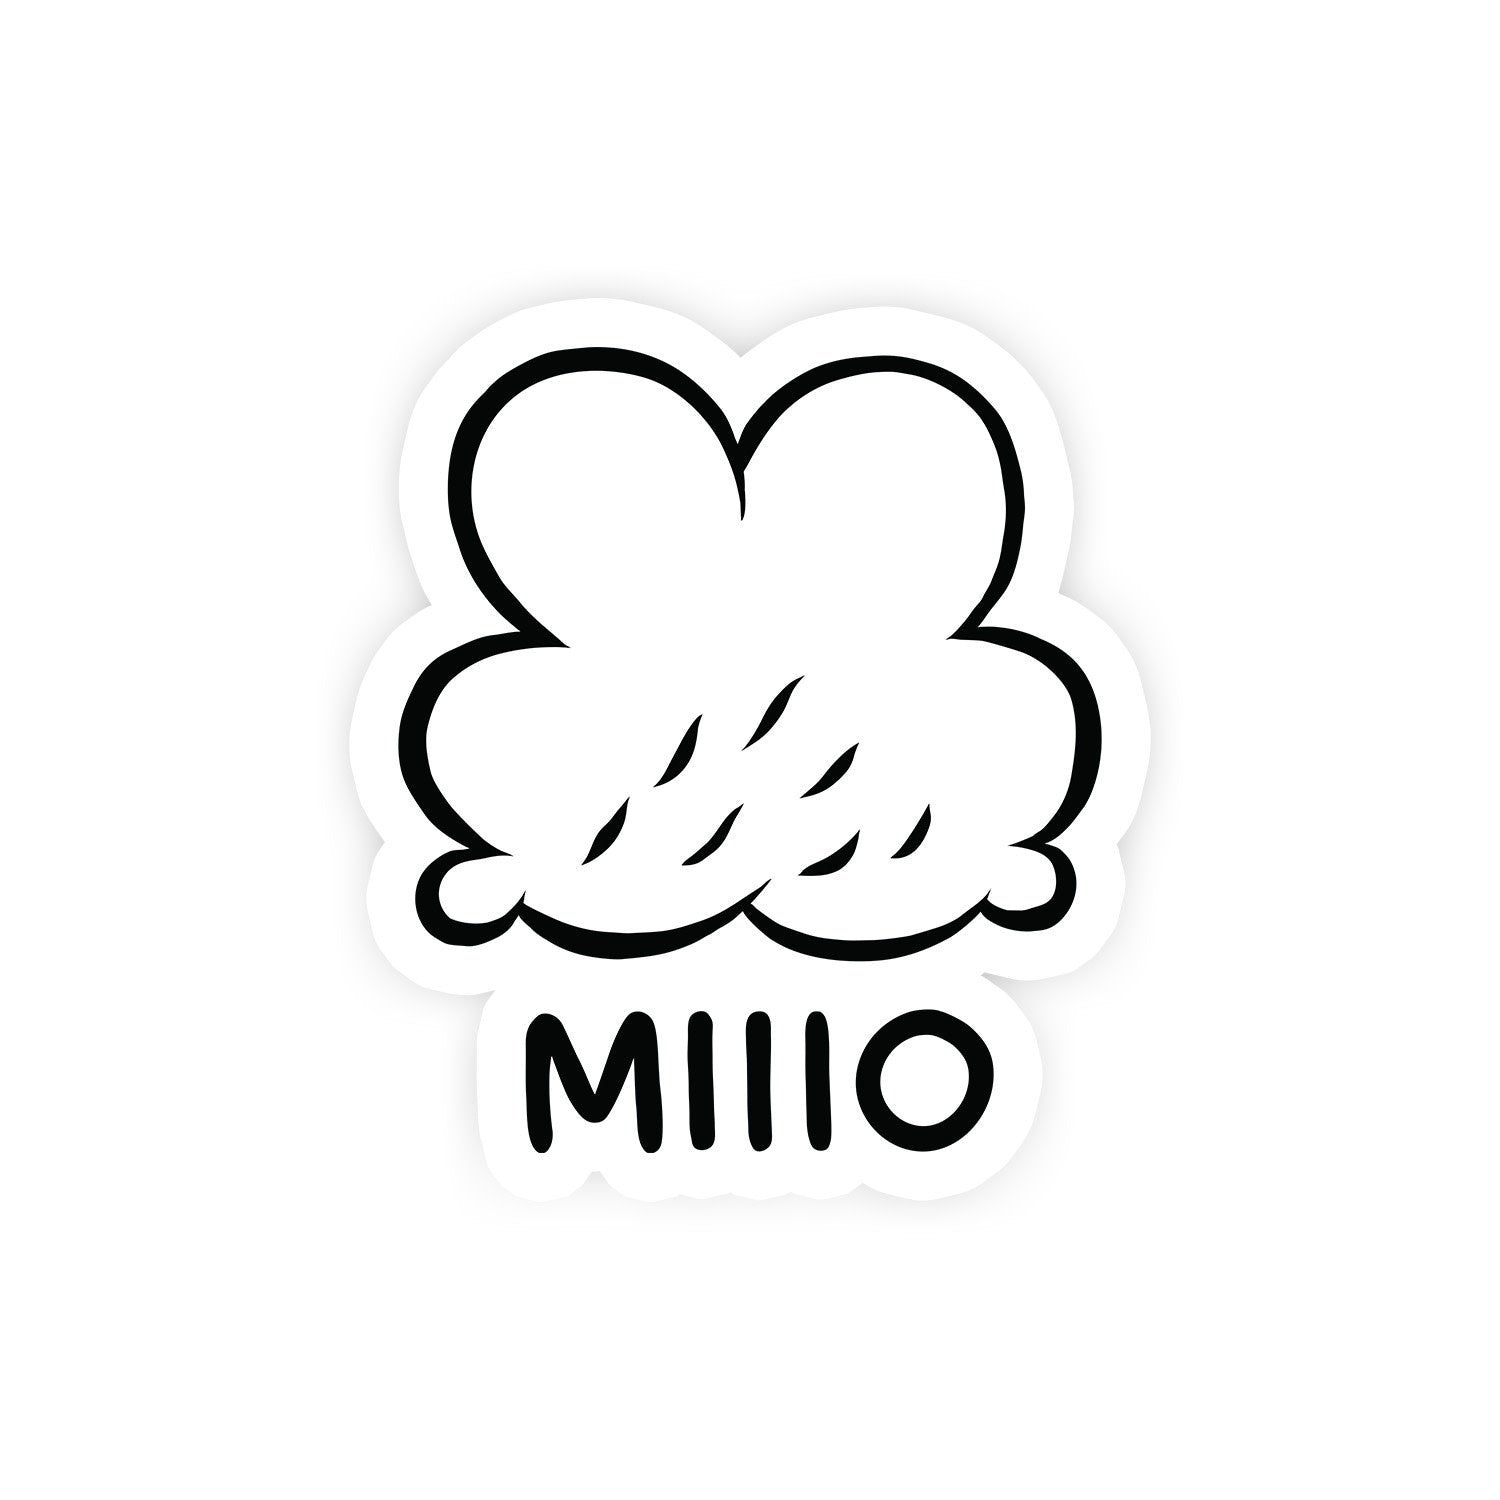 Millo Sticker Pack